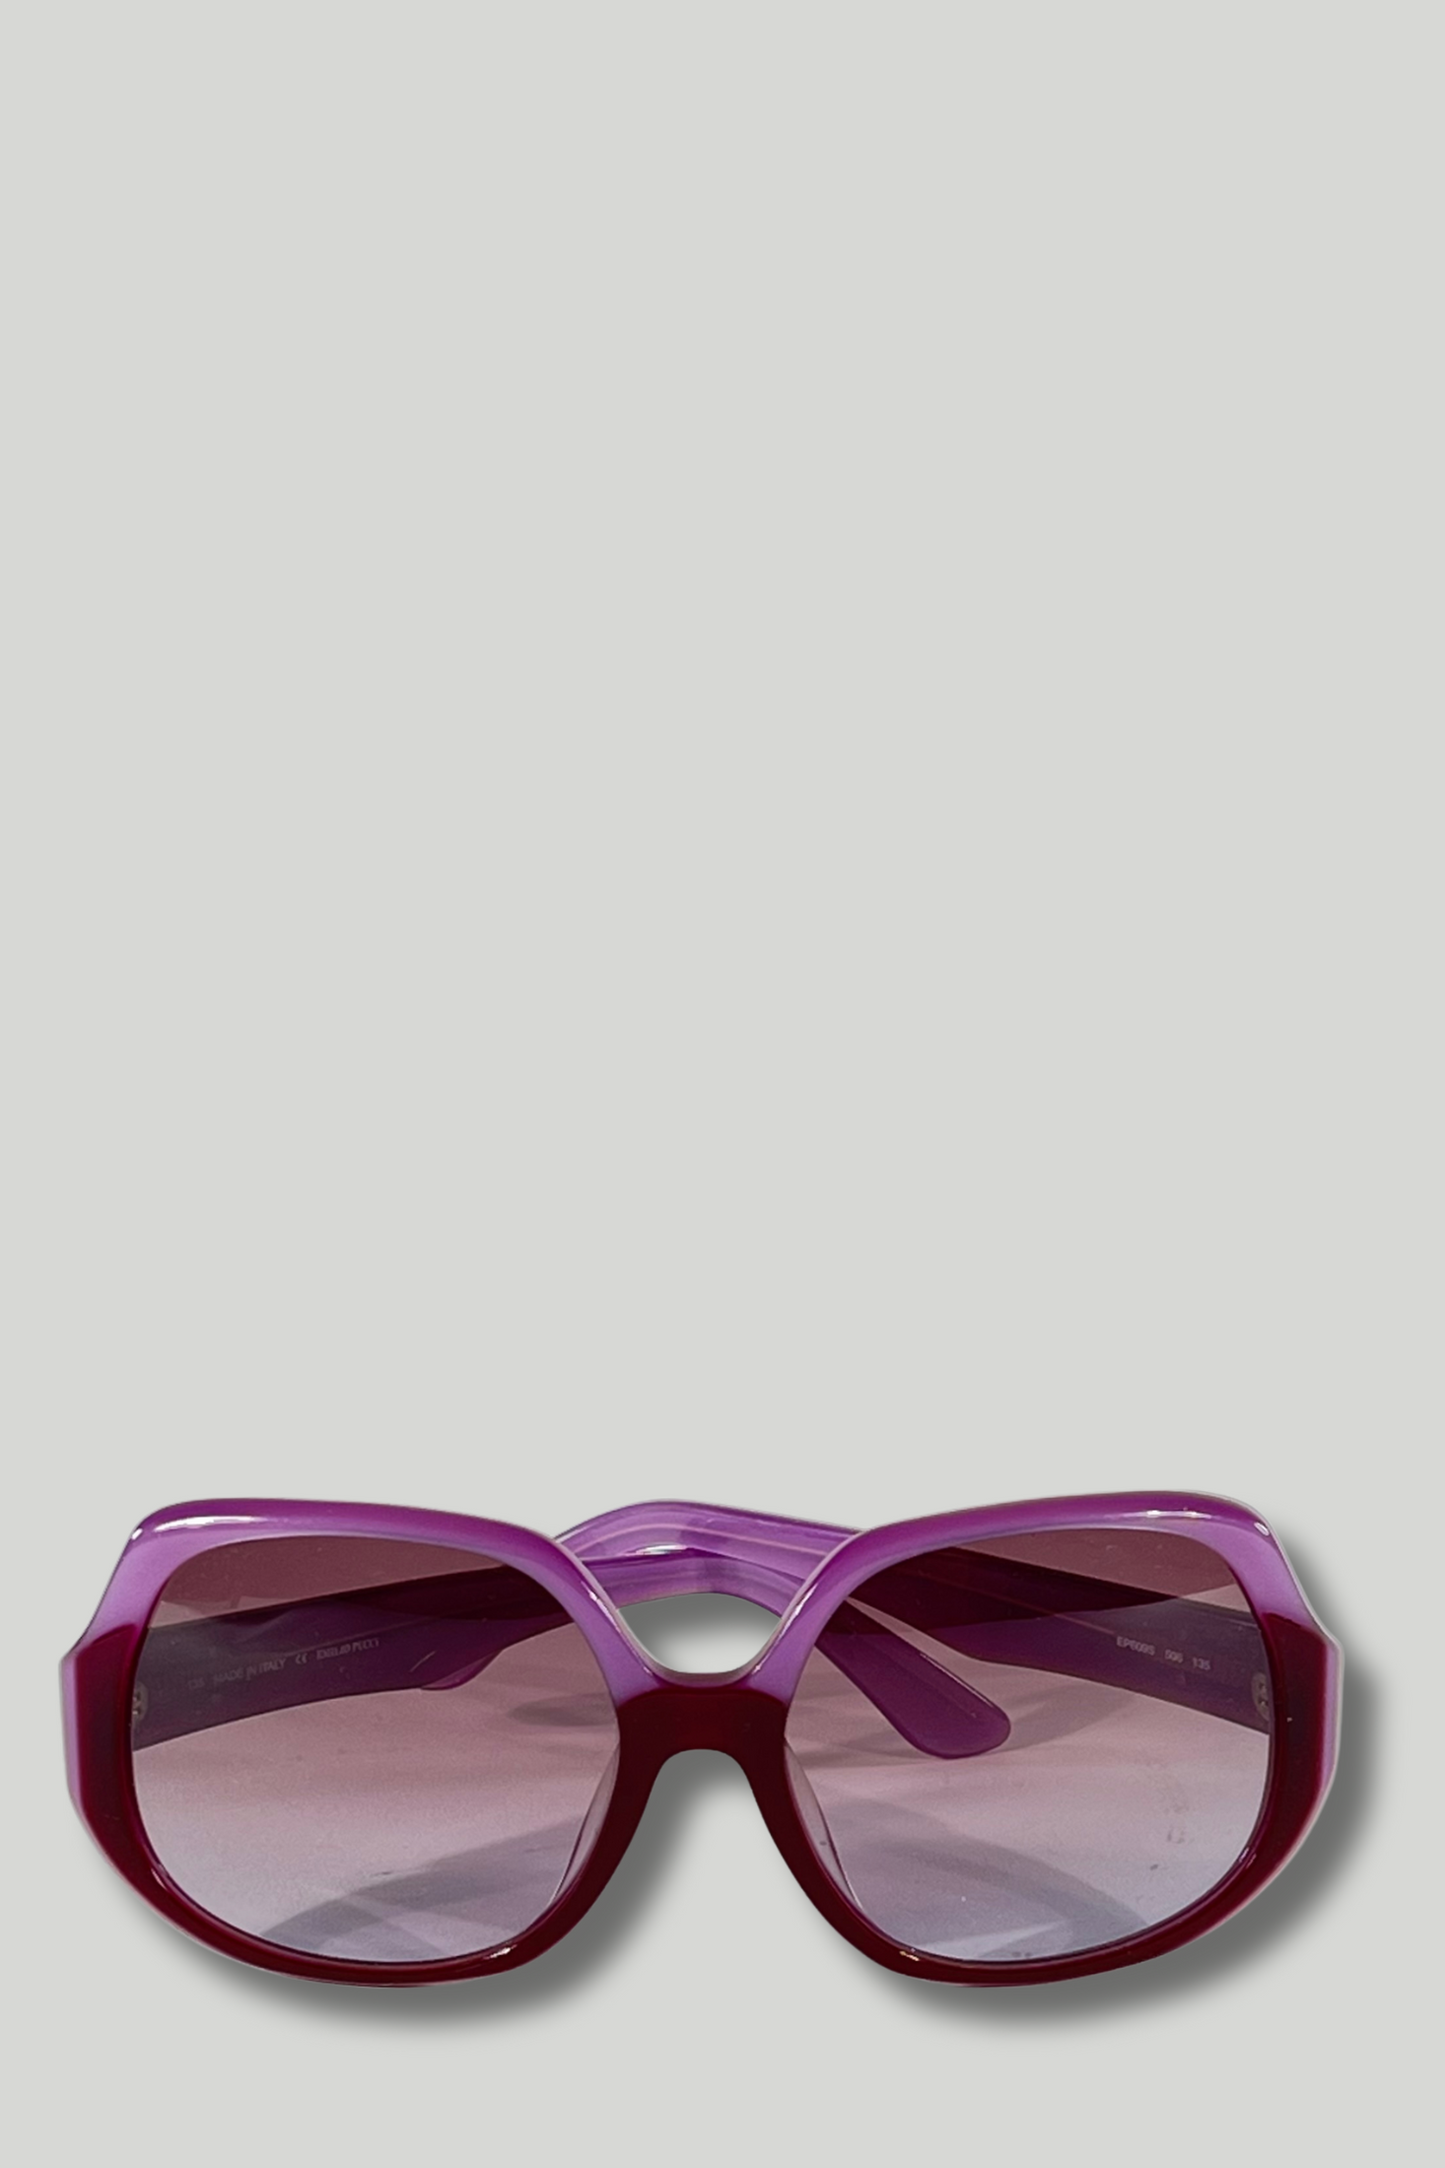 Emilio Pucci Sunglasses